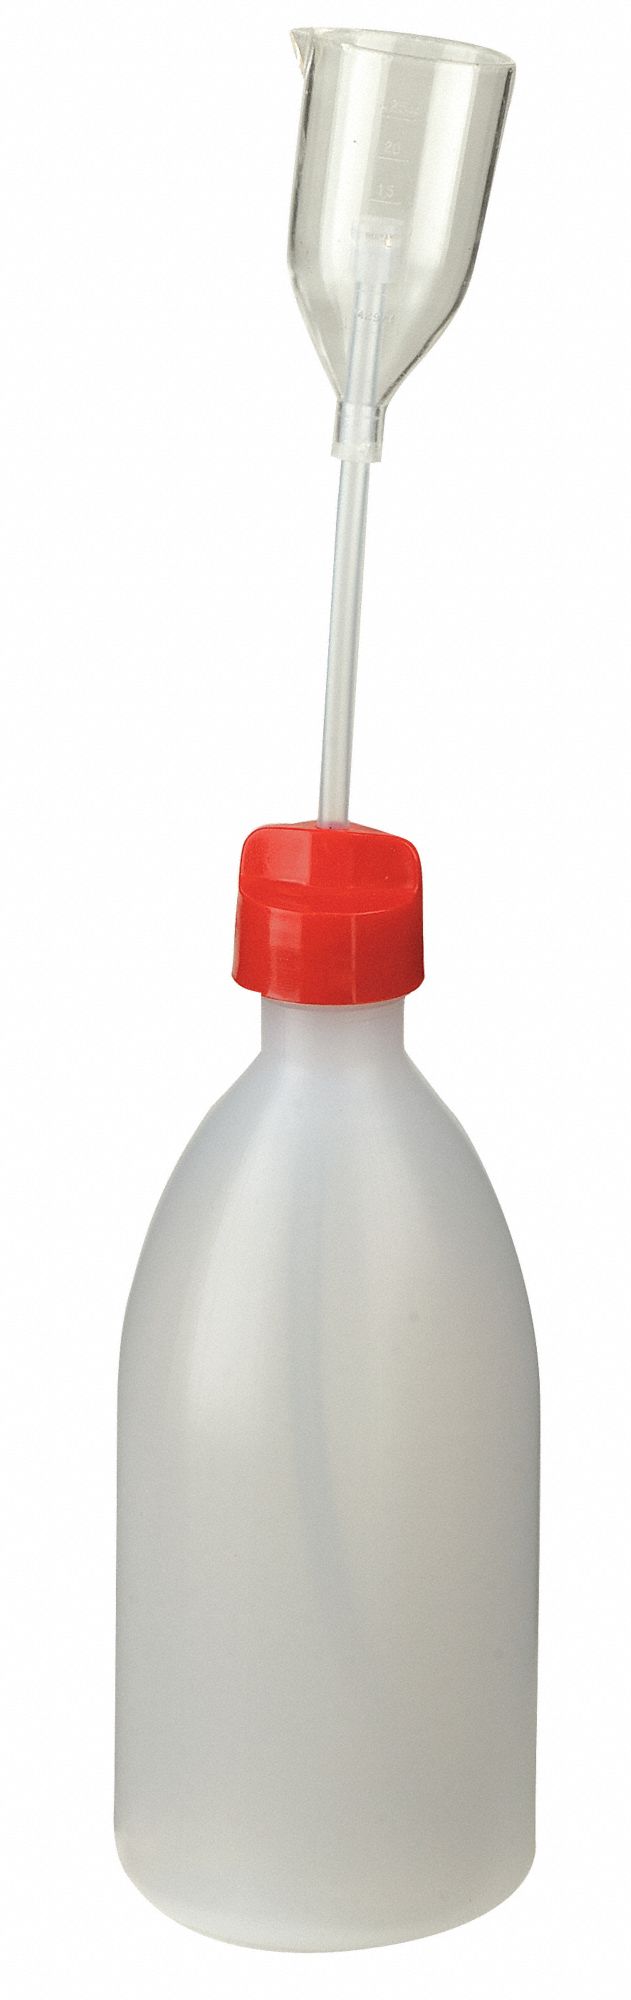 250mL Dispensing Bottle, Narrow Mouth, Low Density Polyethylene, PK 10